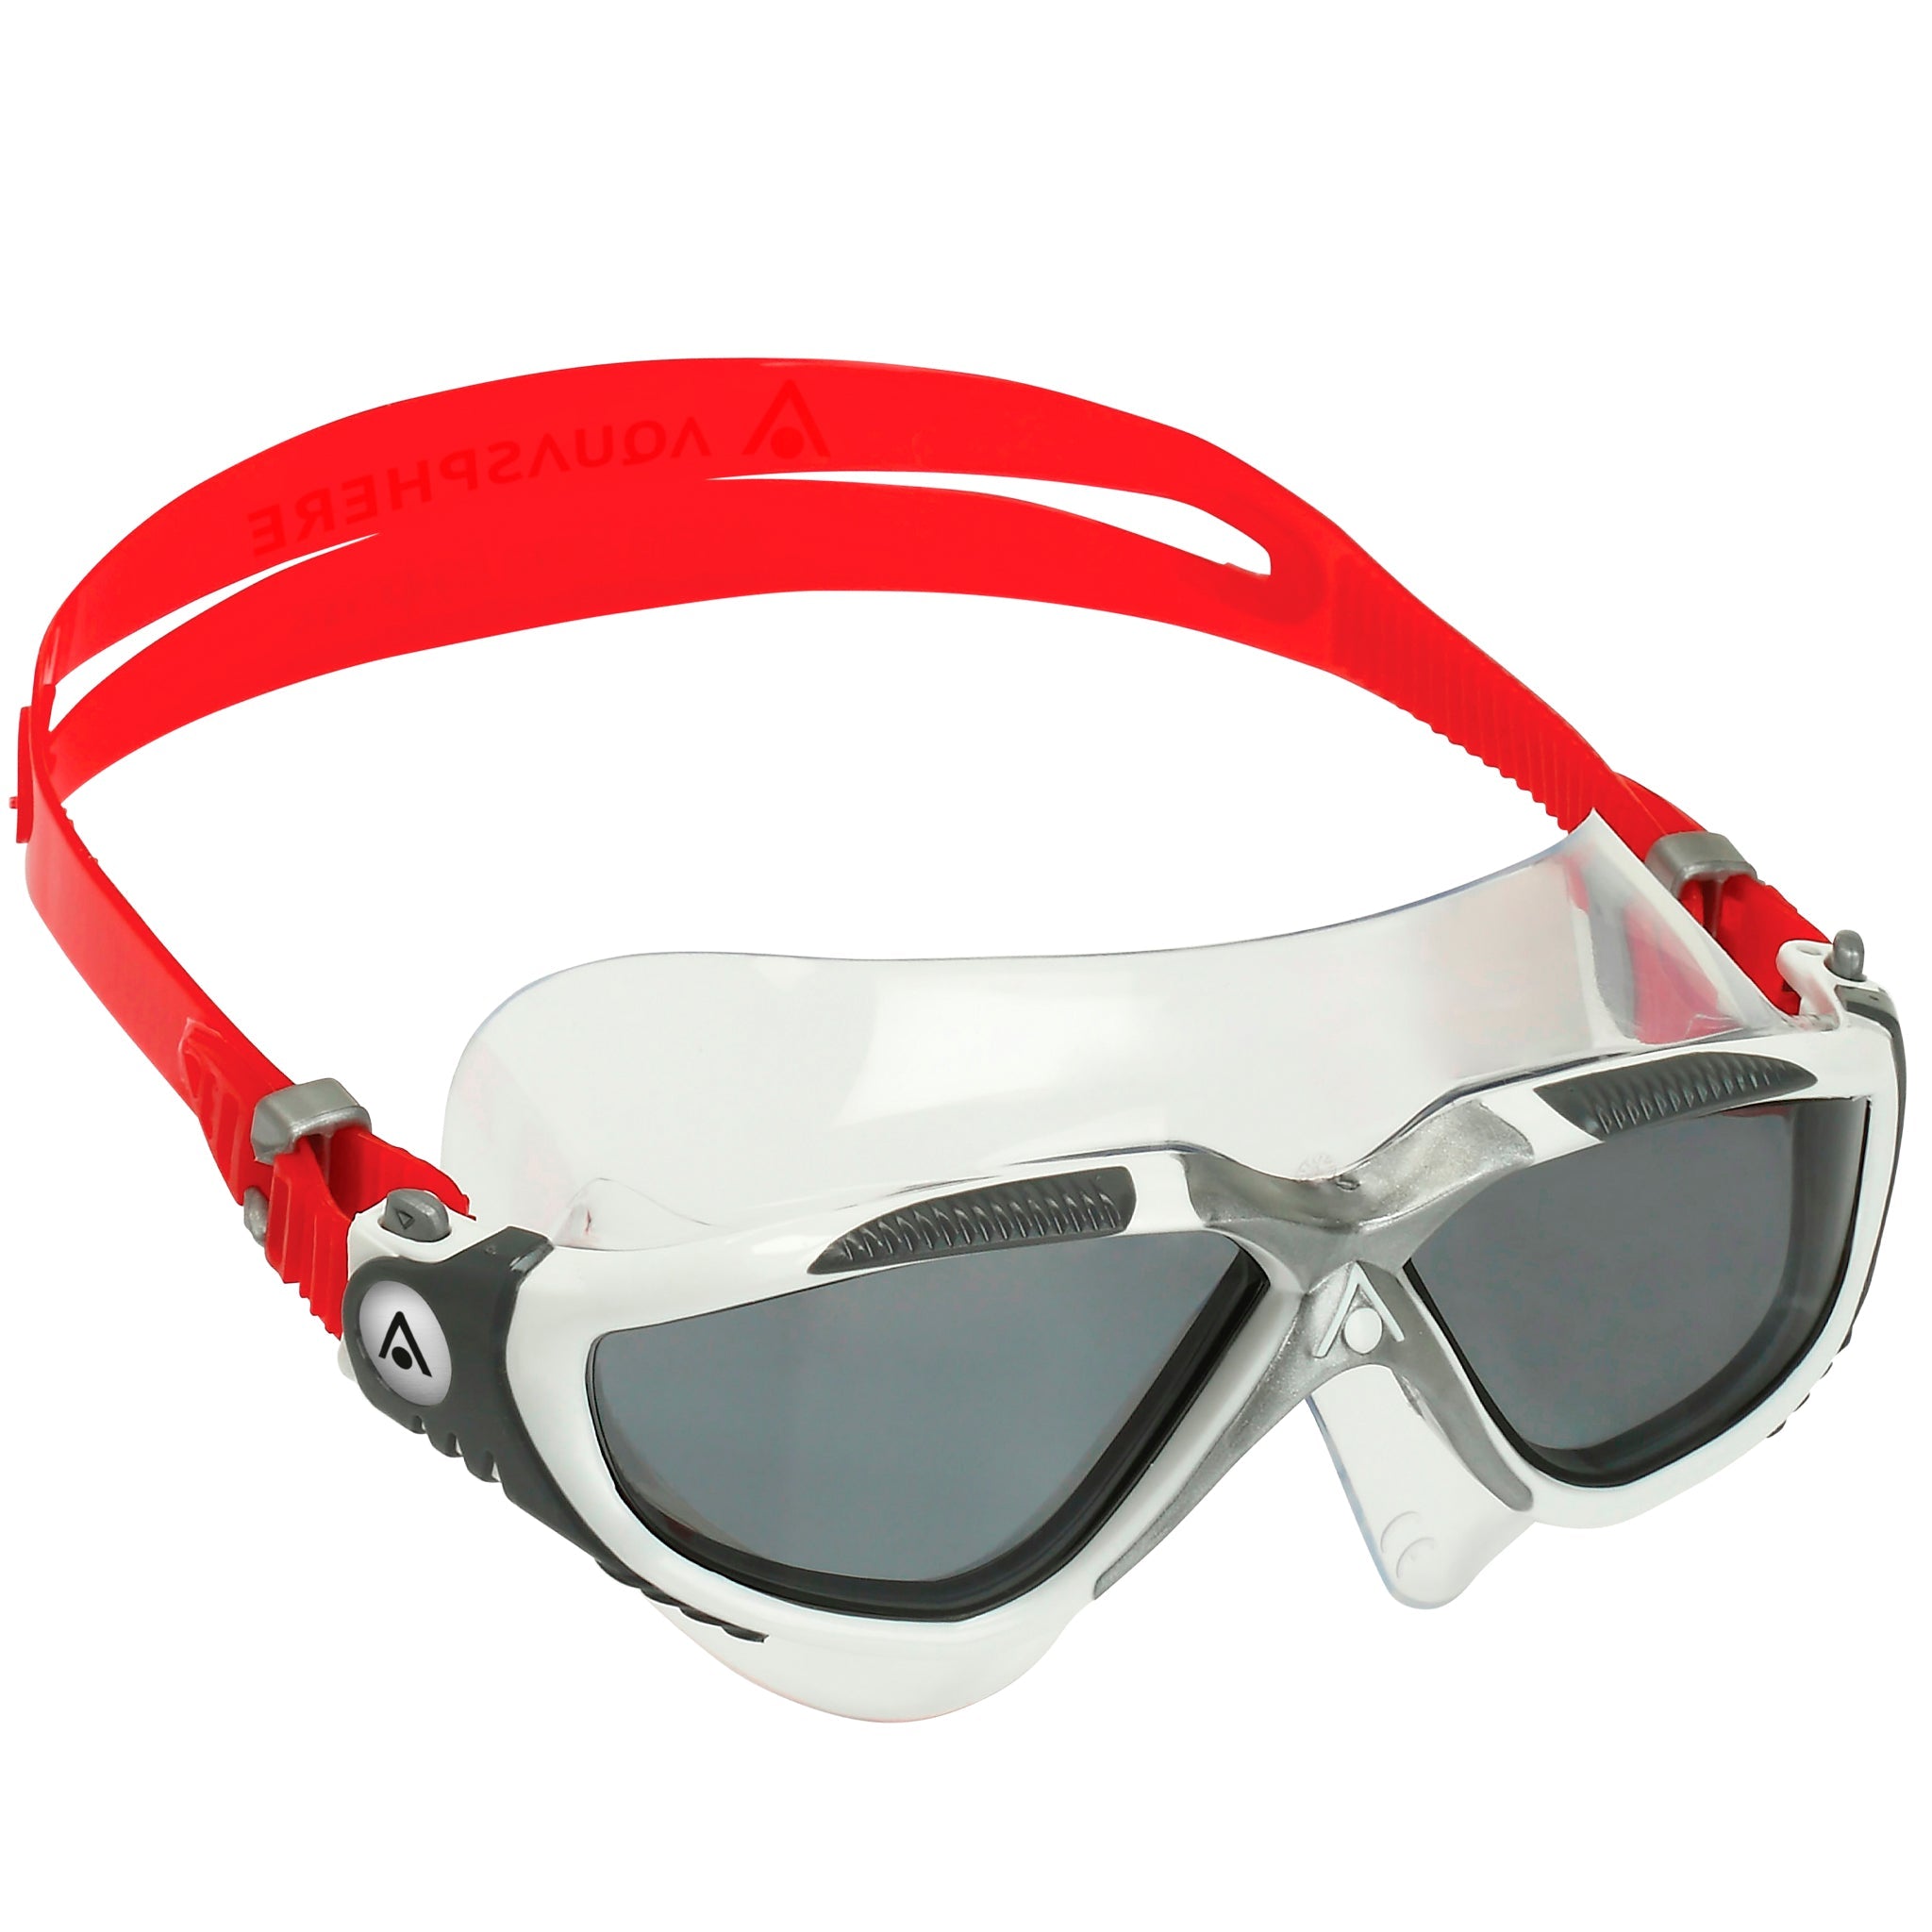 Aquasphere Vista Swimming Goggles Mask Smoke Tinted Lenses | White/Silver Right